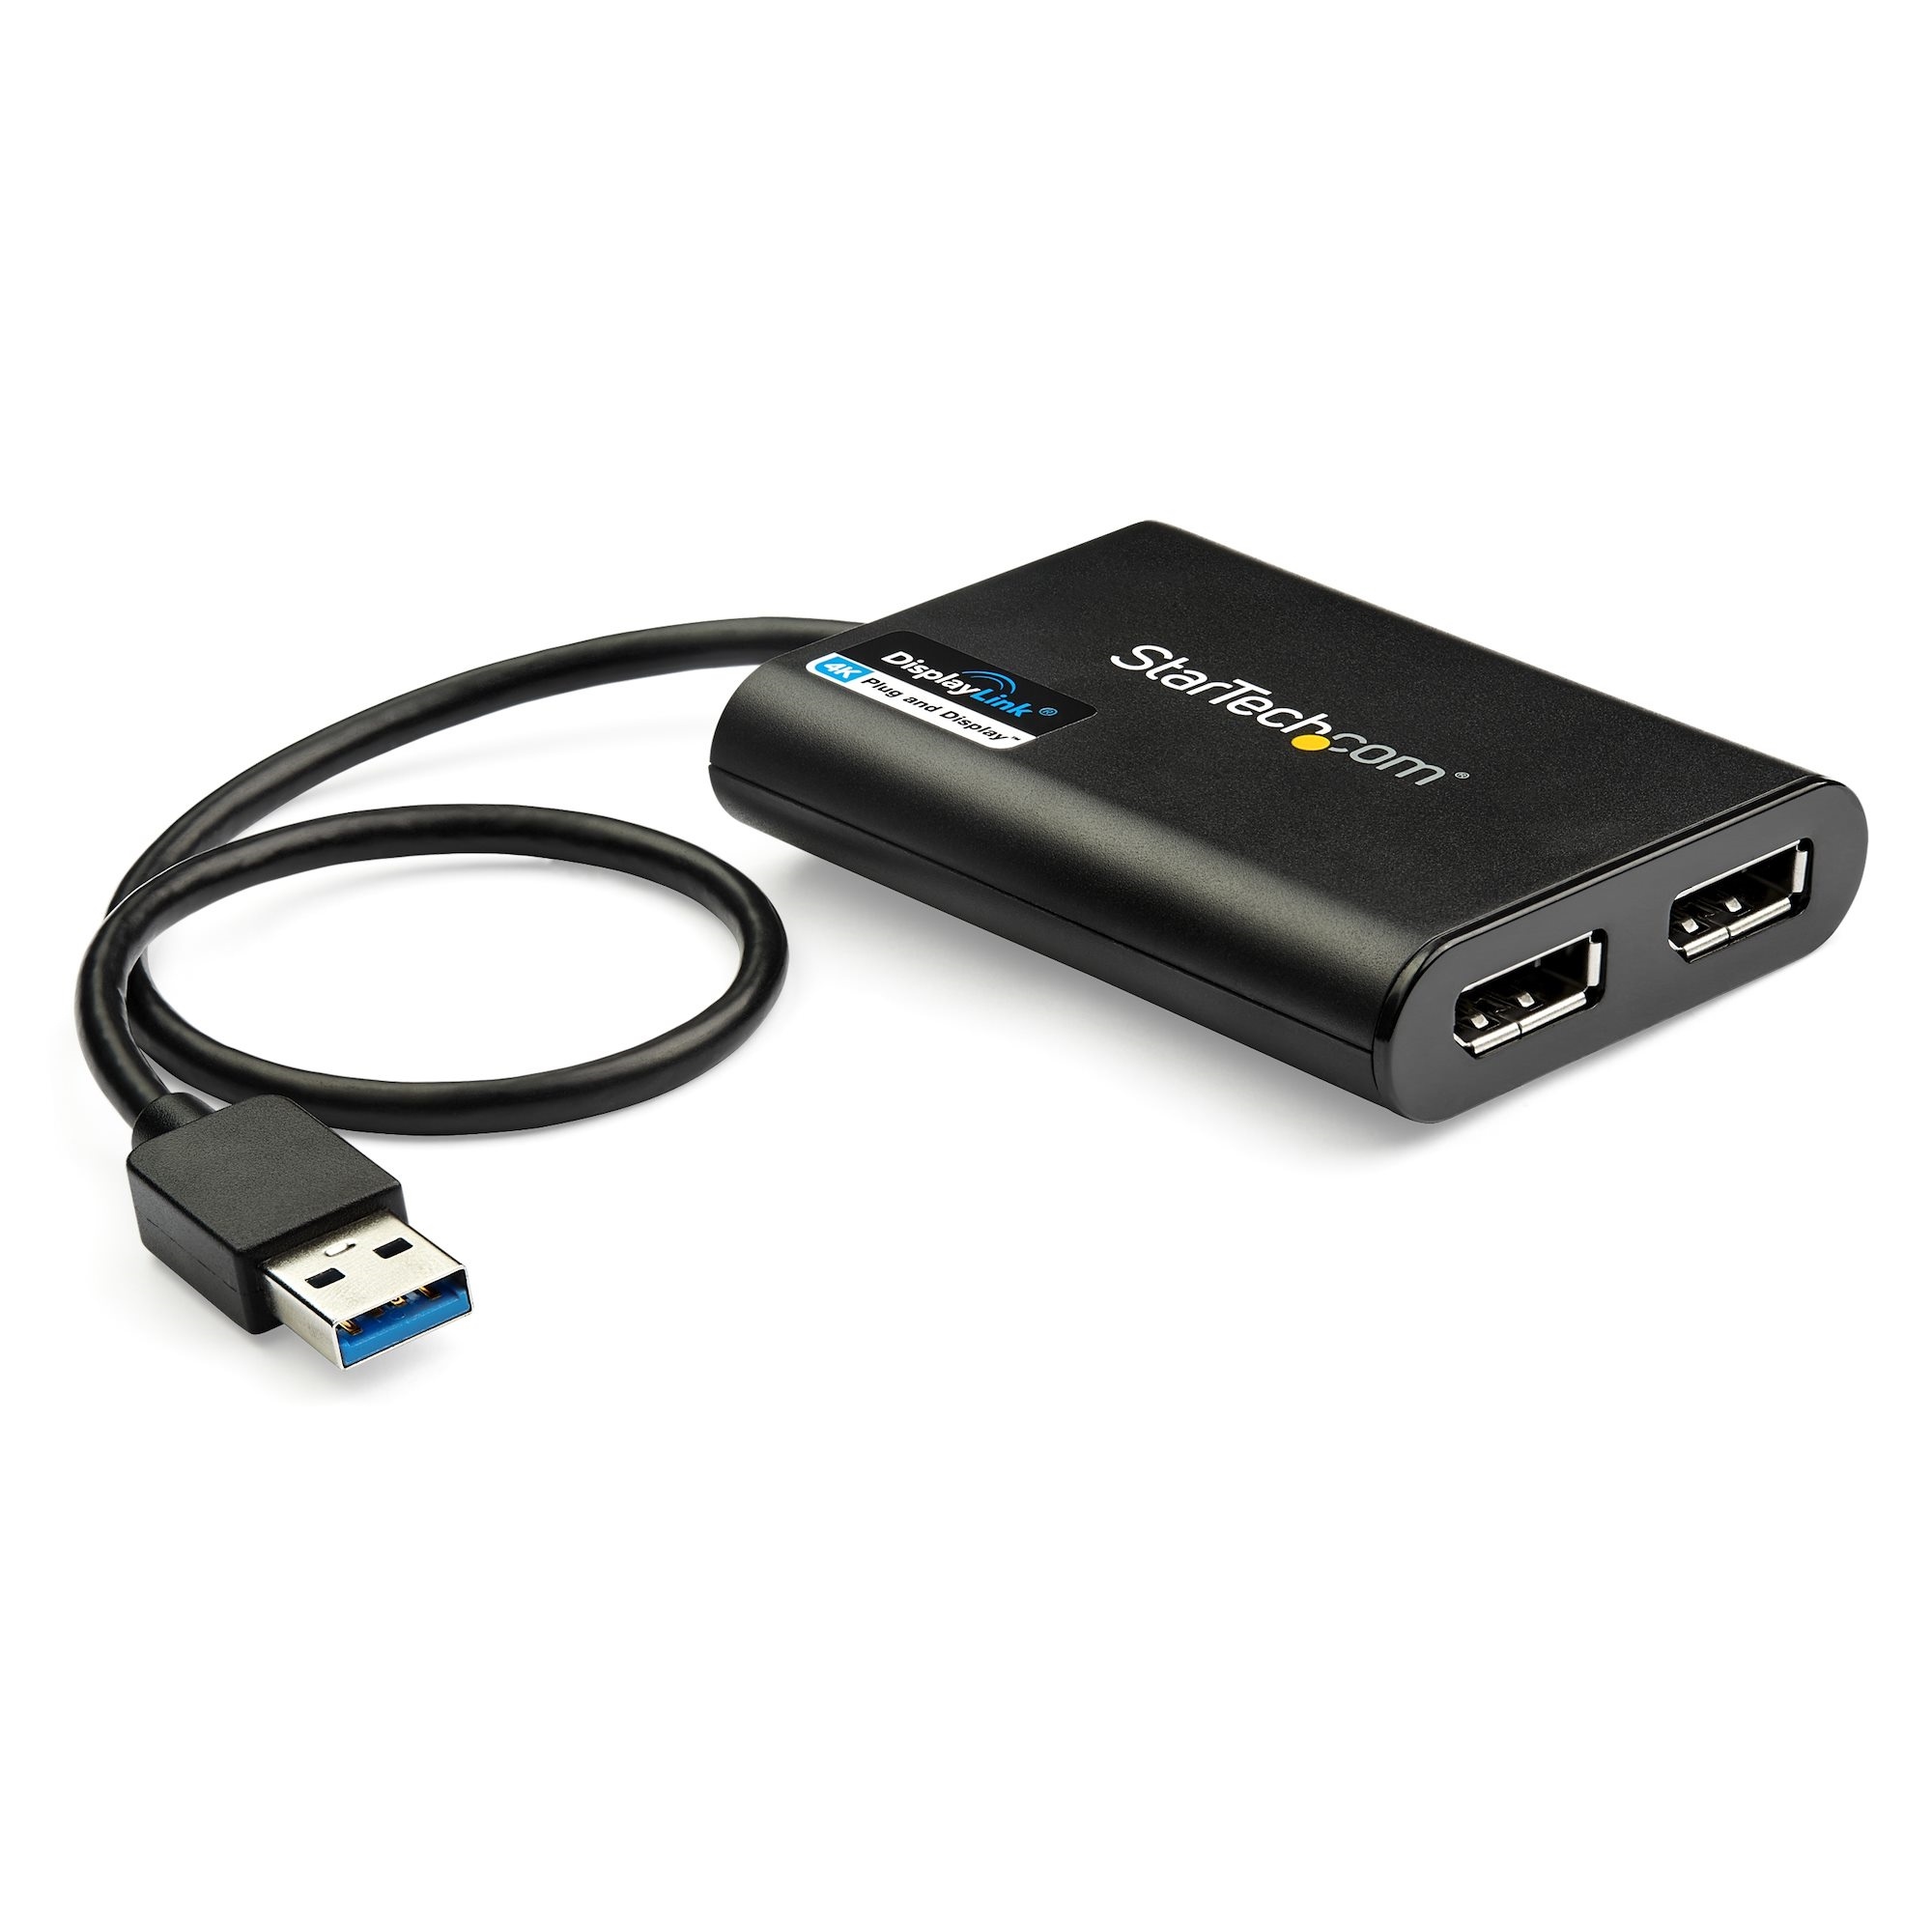 StarTech Adapter USB to Dual DisplayPort 4K 60Hz